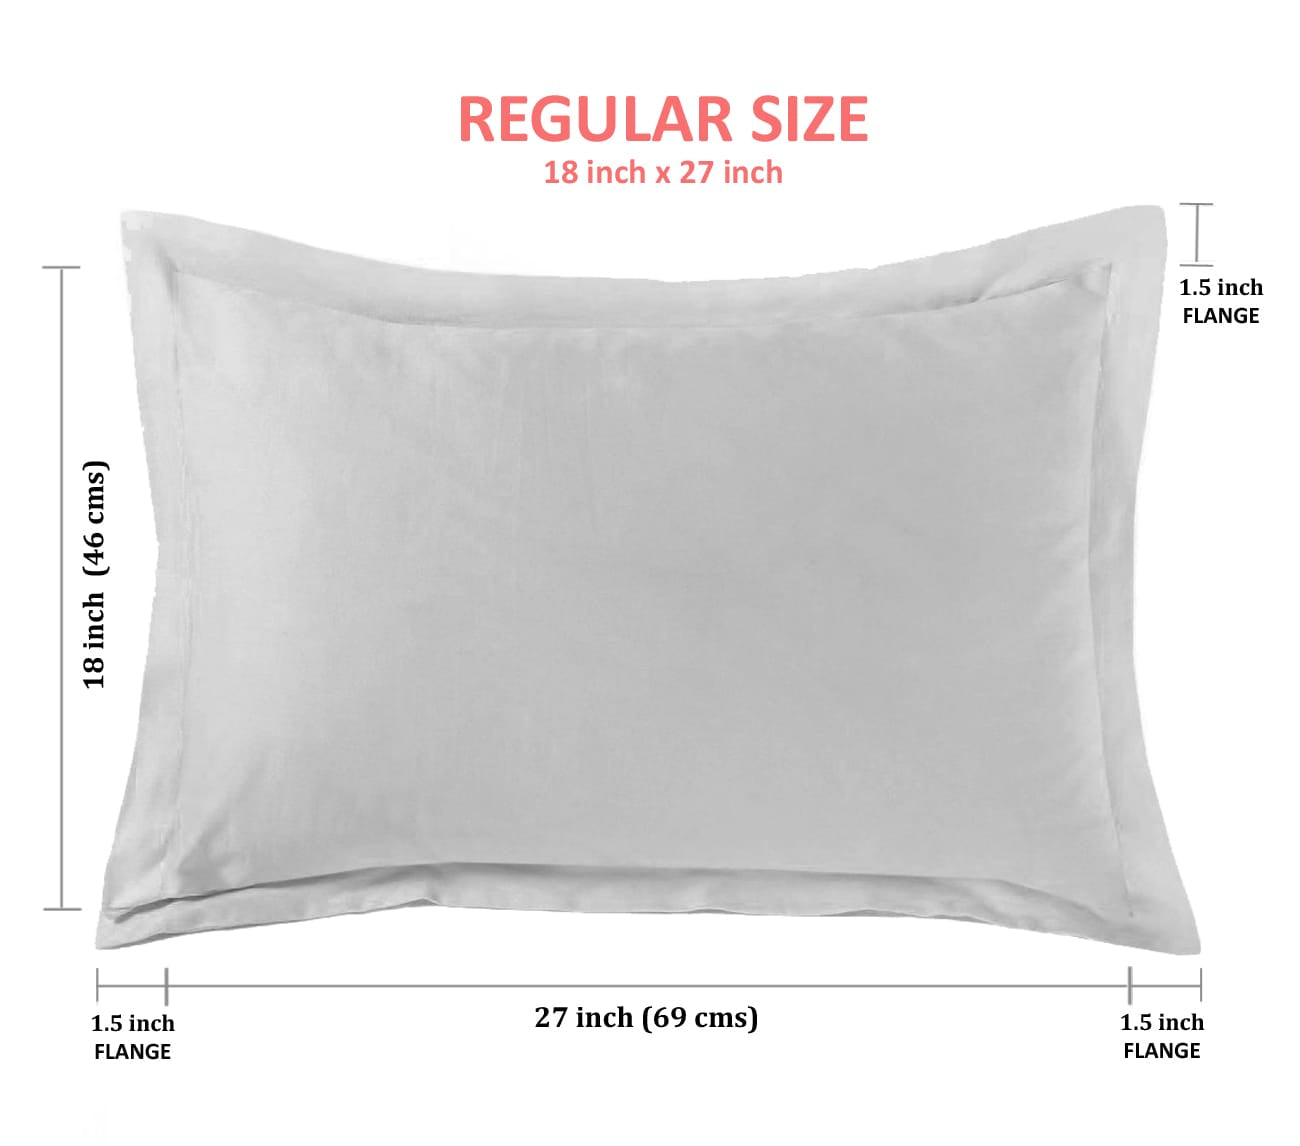 Soft 210 TC Plain Cotton Pillow Cover Set In Marine Blue Online In India(2 Pcs)